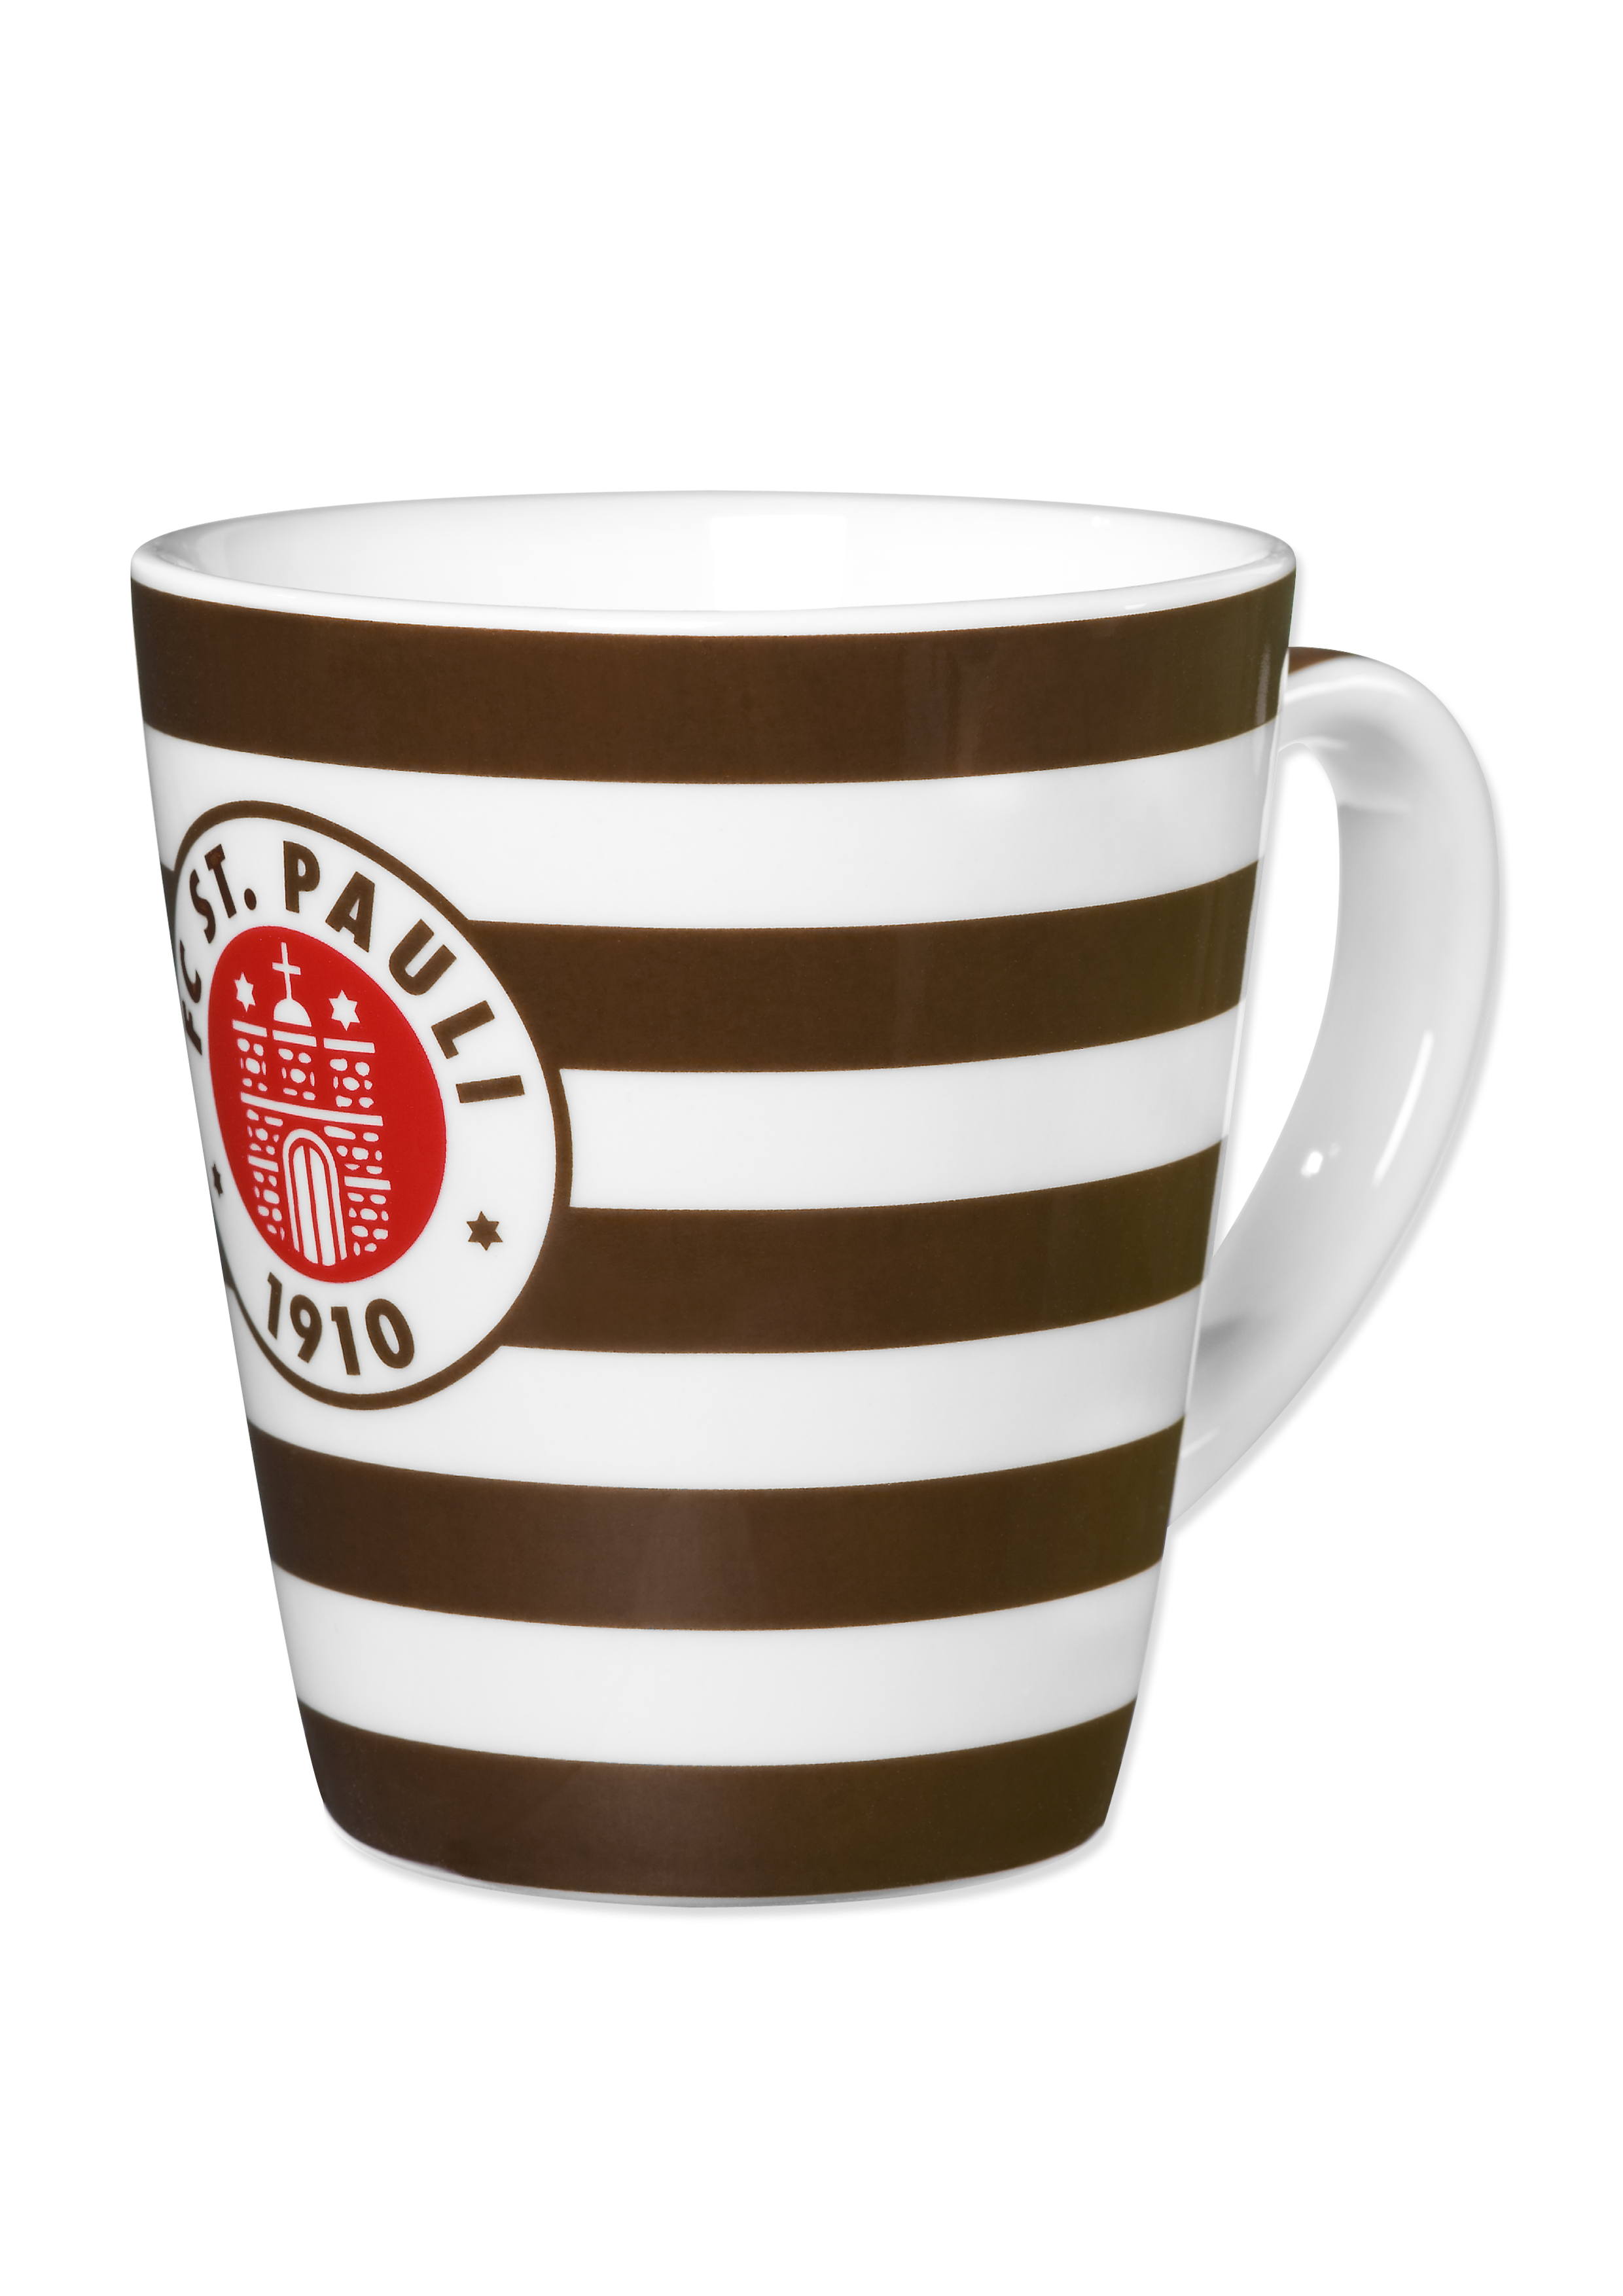 Logo coffee mug, striped